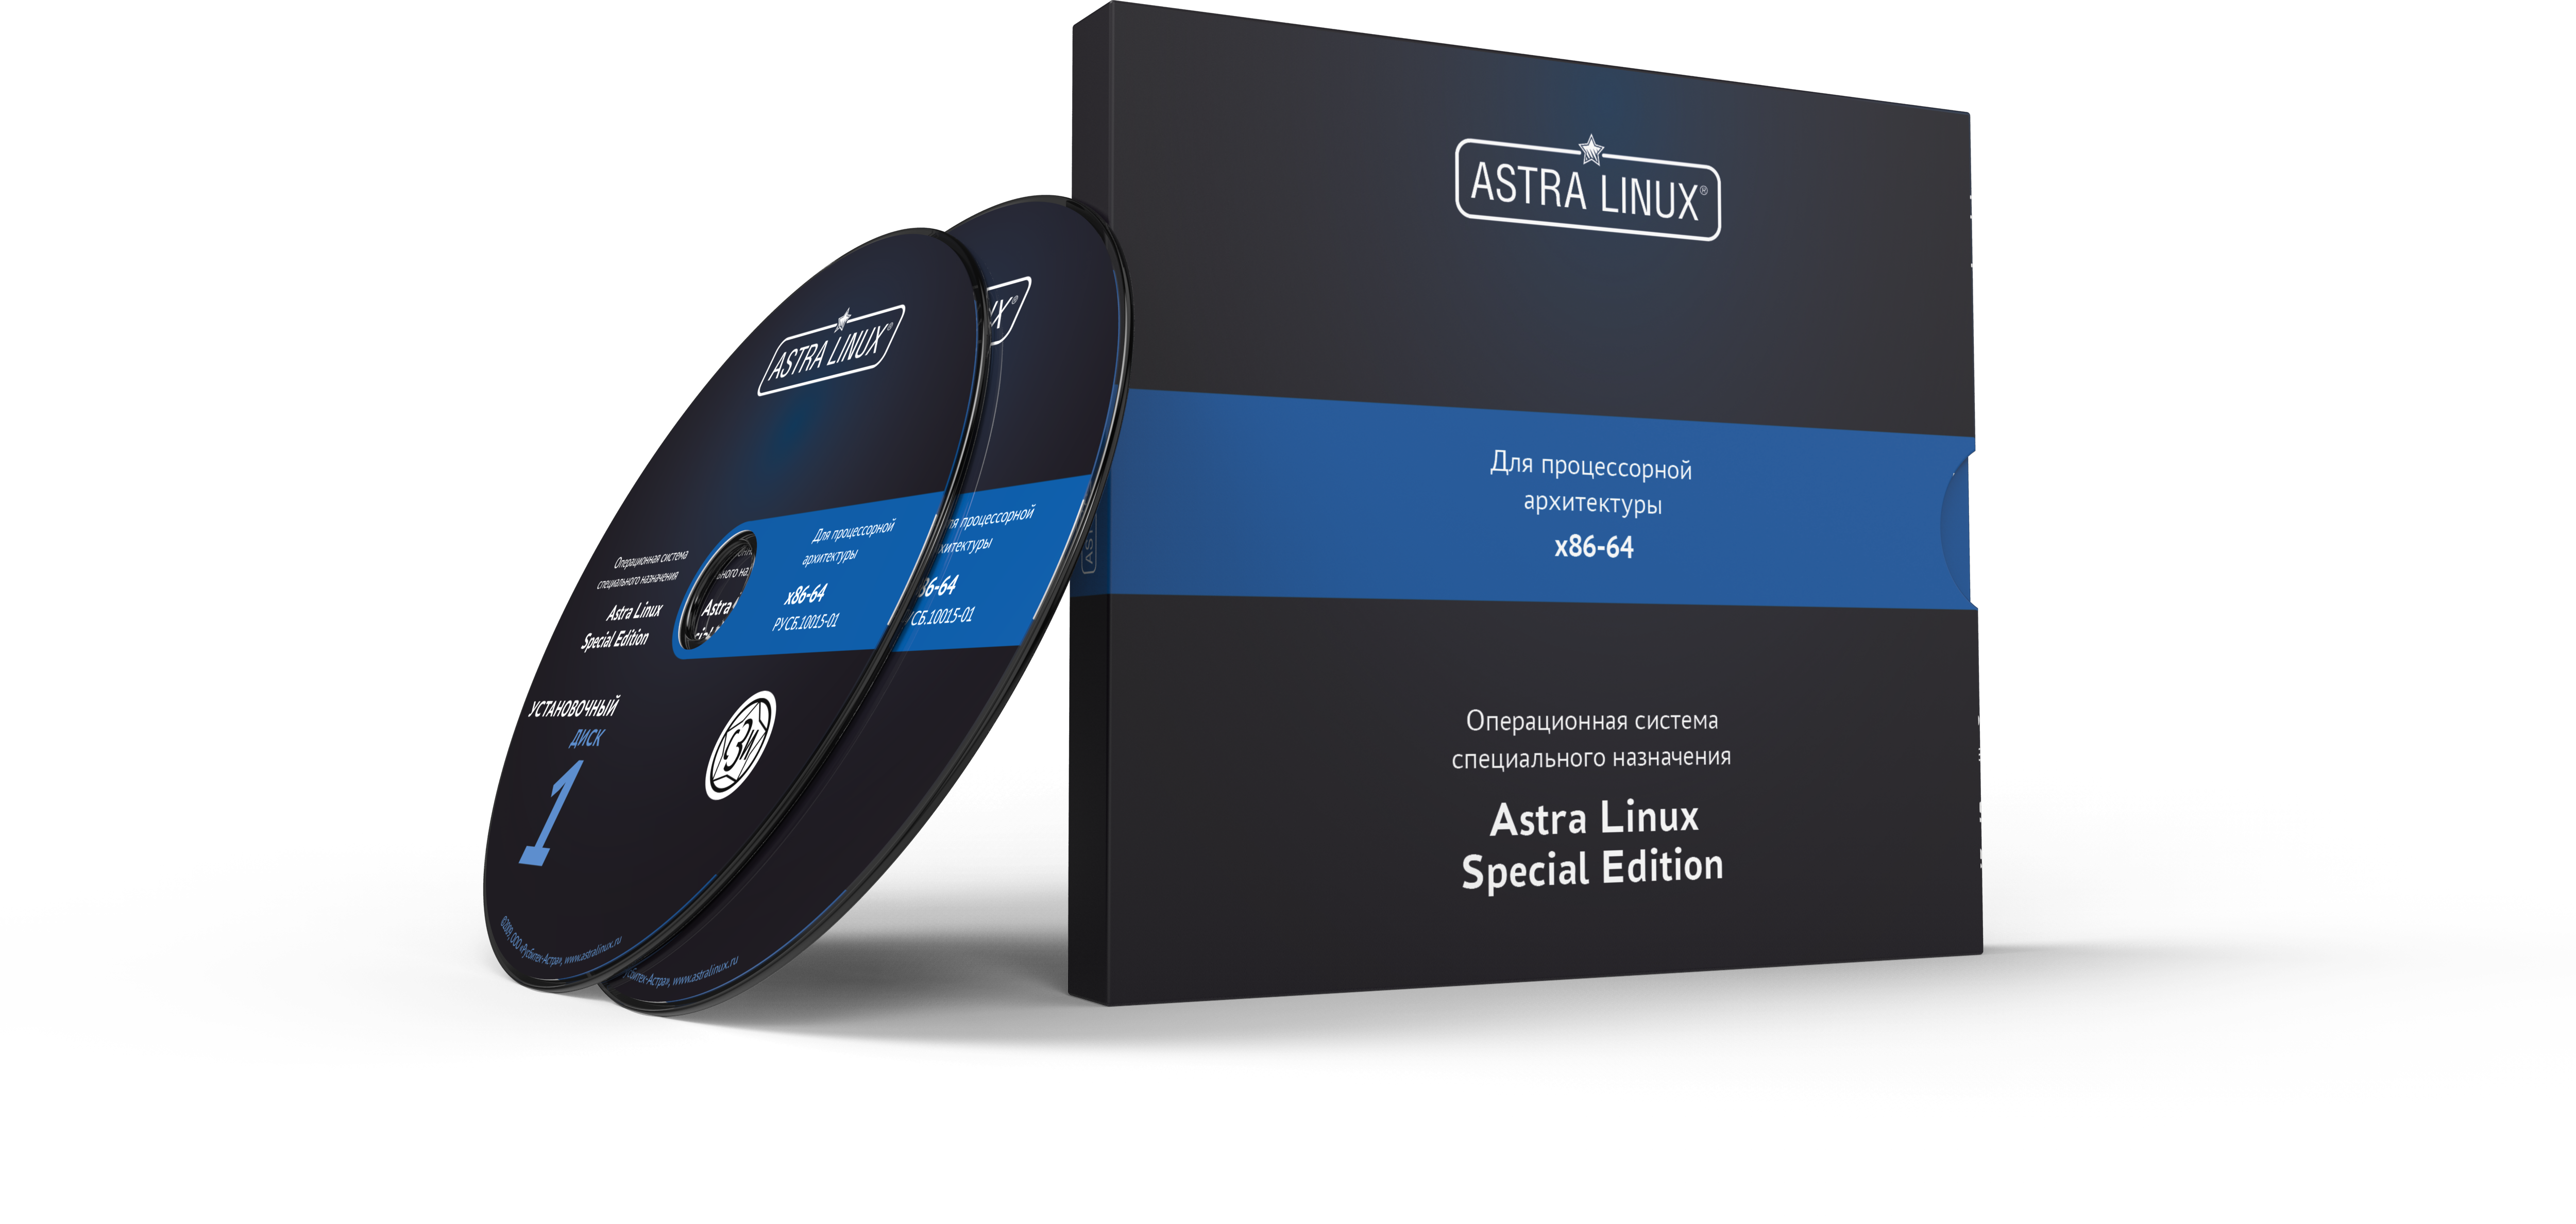 Astra Linux Special Edition 1.7 - Воронеж, "Усиленный", электронный, ФСТЭК, на 36 мес., ТП "Стандарт" на 36 мес.